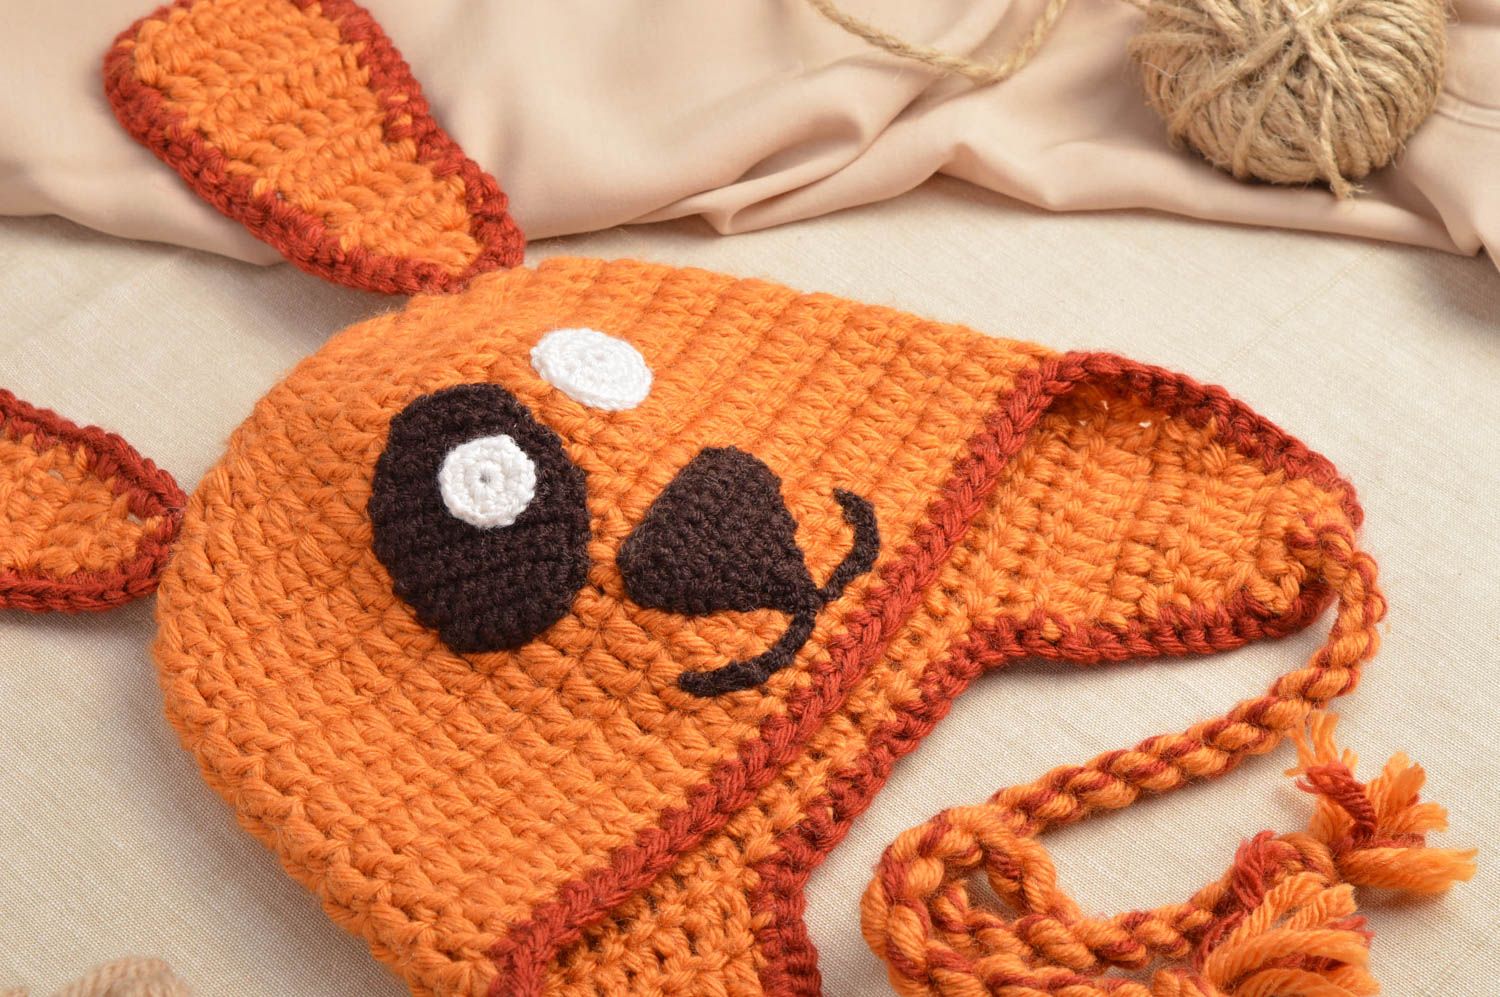 Crochet baby hat handmade accessories toddler hat presents for kids warm hat photo 1